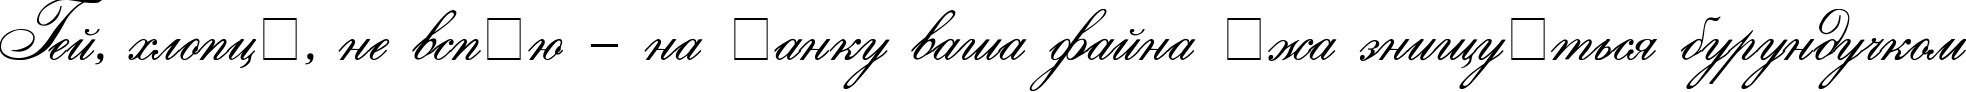 Пример написания шрифтом Saksonia текста на украинском